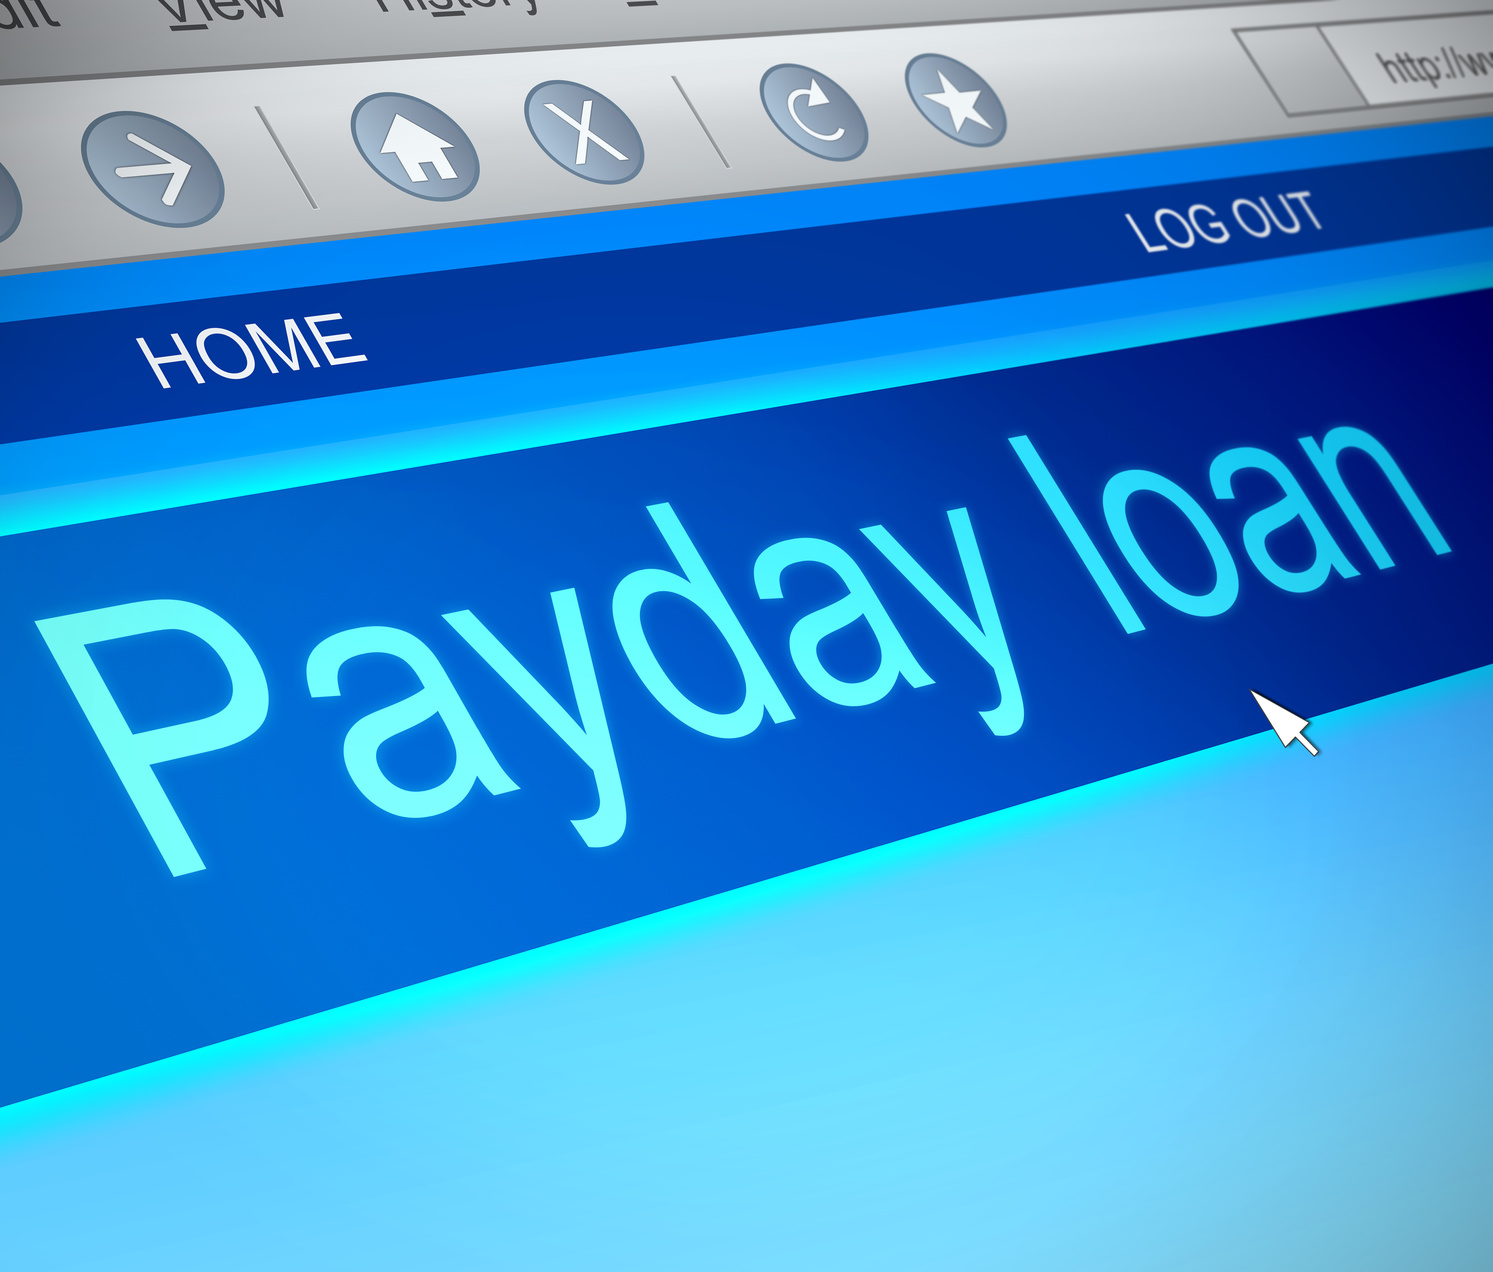 payday-loans.jpg